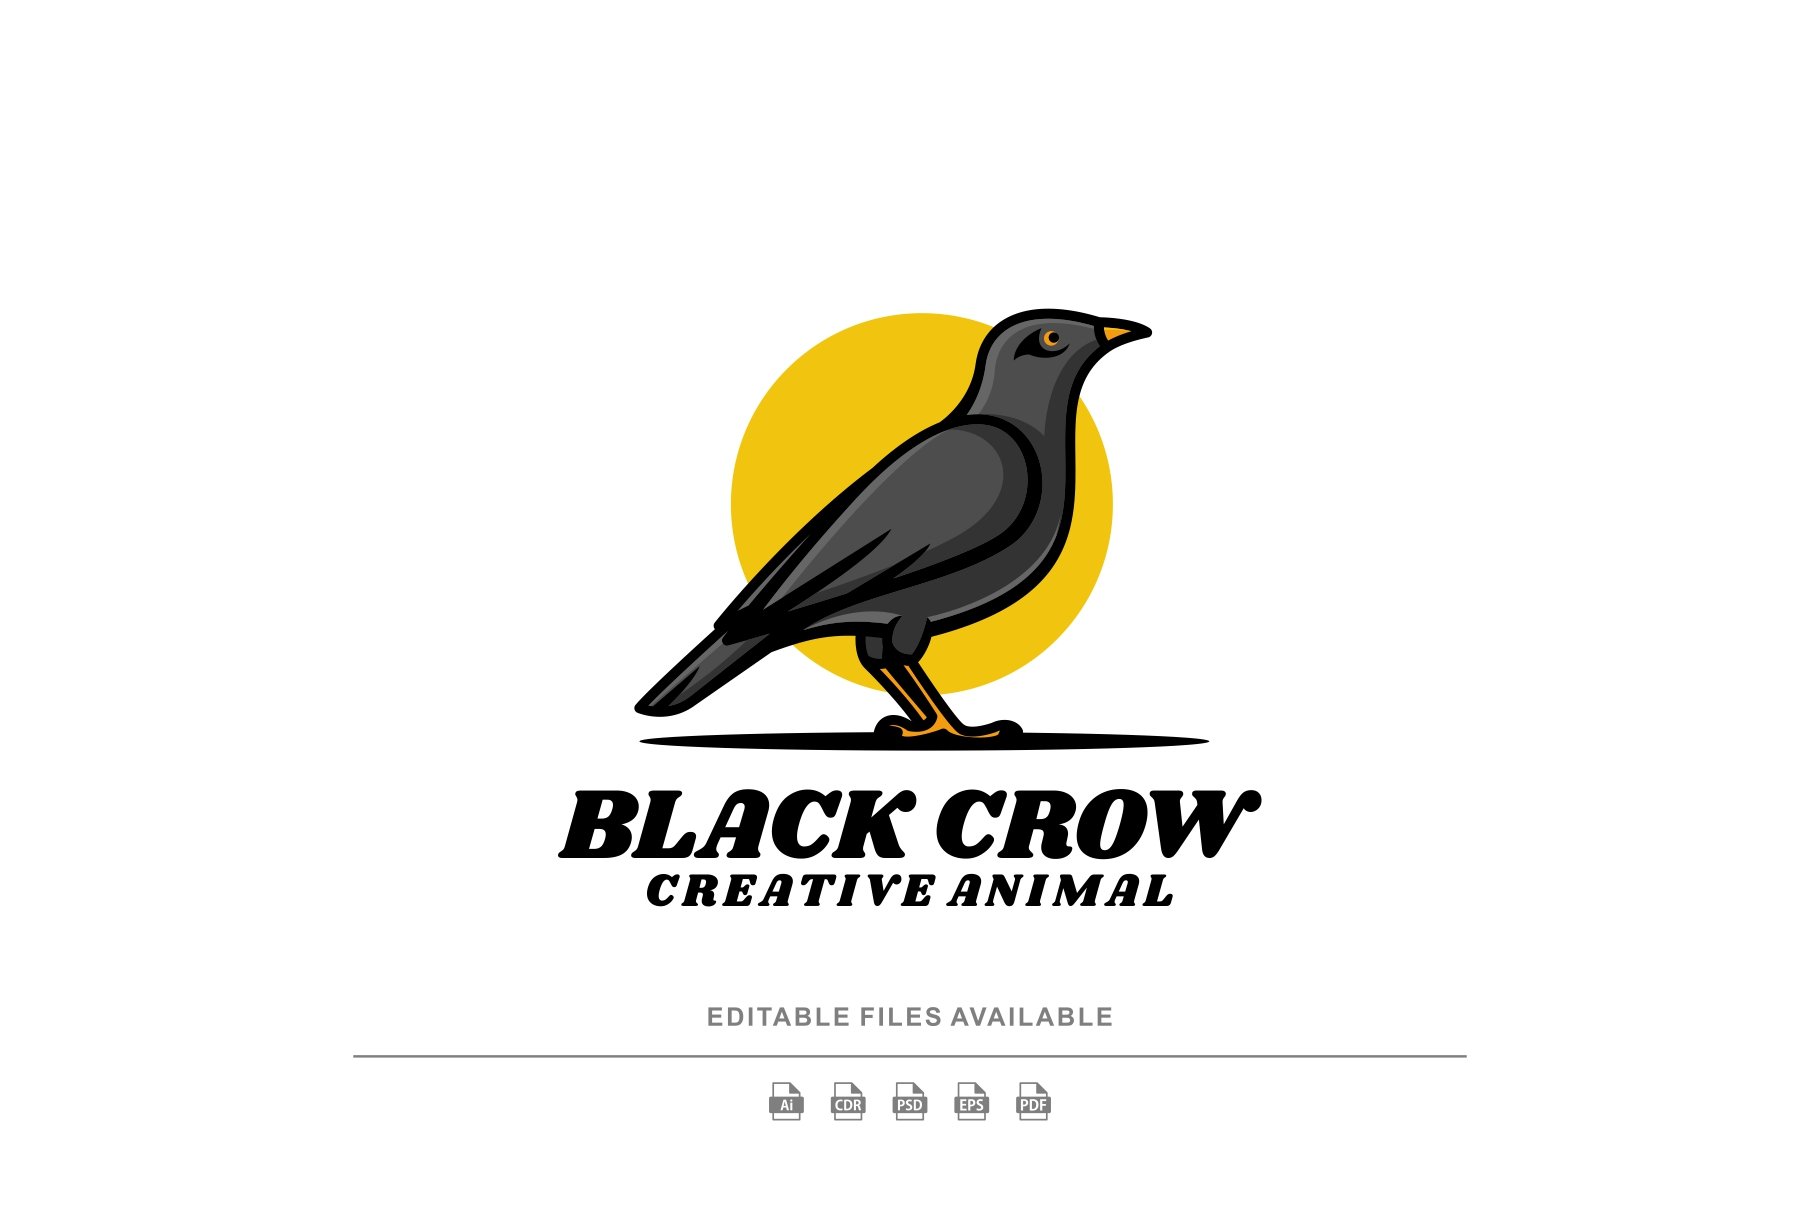 Black Crow Simple Mascot Logo cover image.